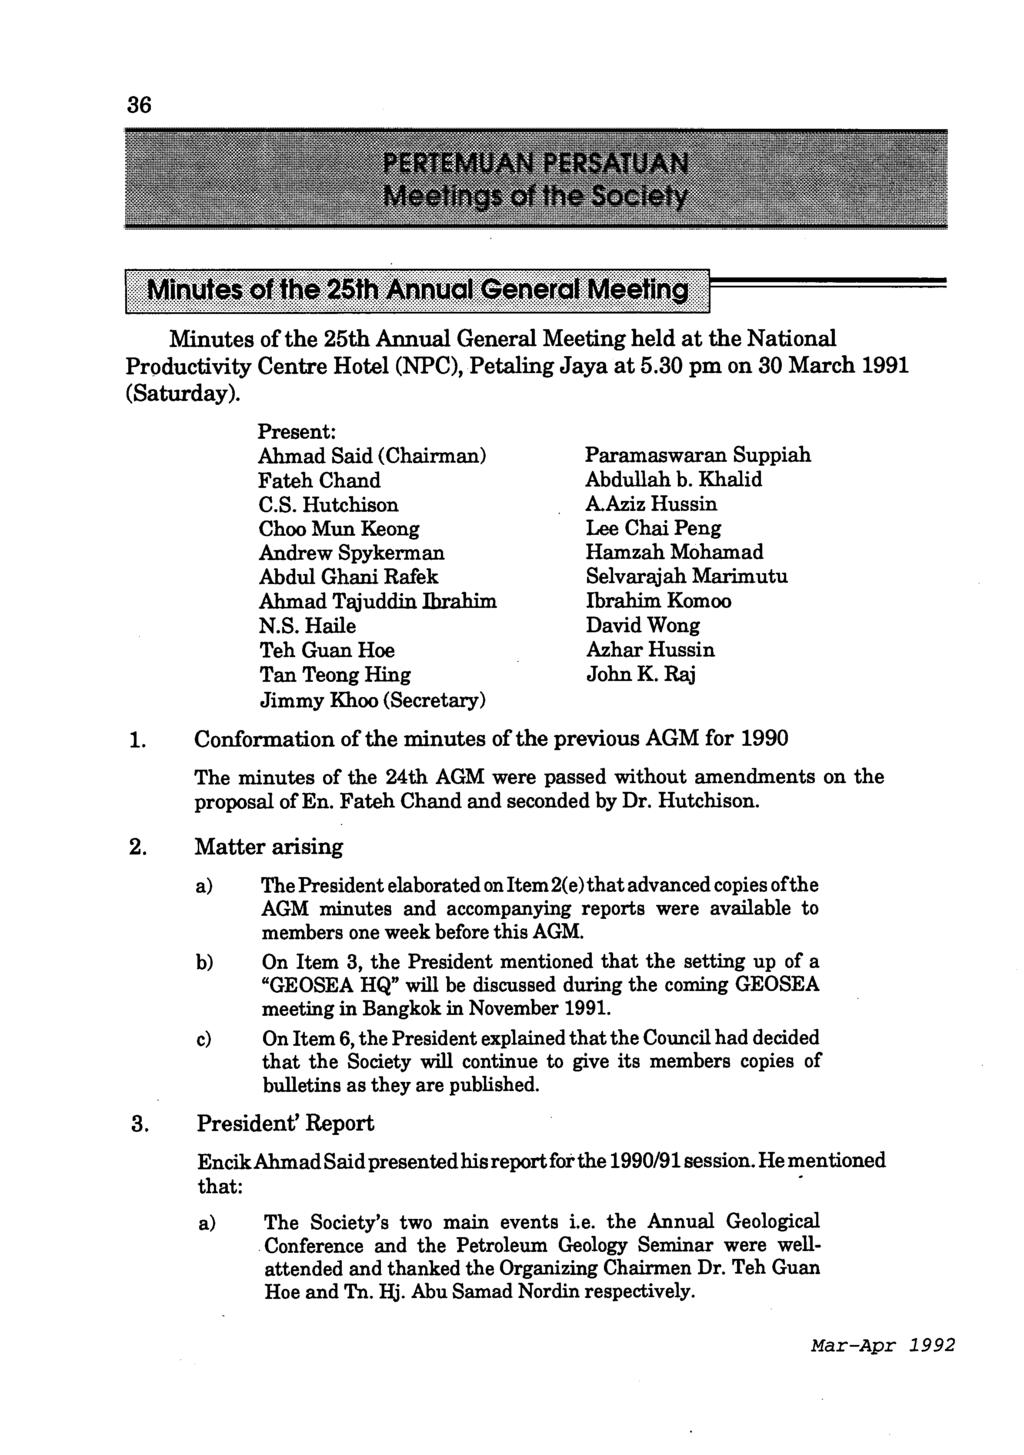 36 Minutes of the 25th Annual General Meeting held at the National Productivity Centre Hotel (NPC),Petaling Jaya at 5.30 pm on 30 March 1991 (Sa